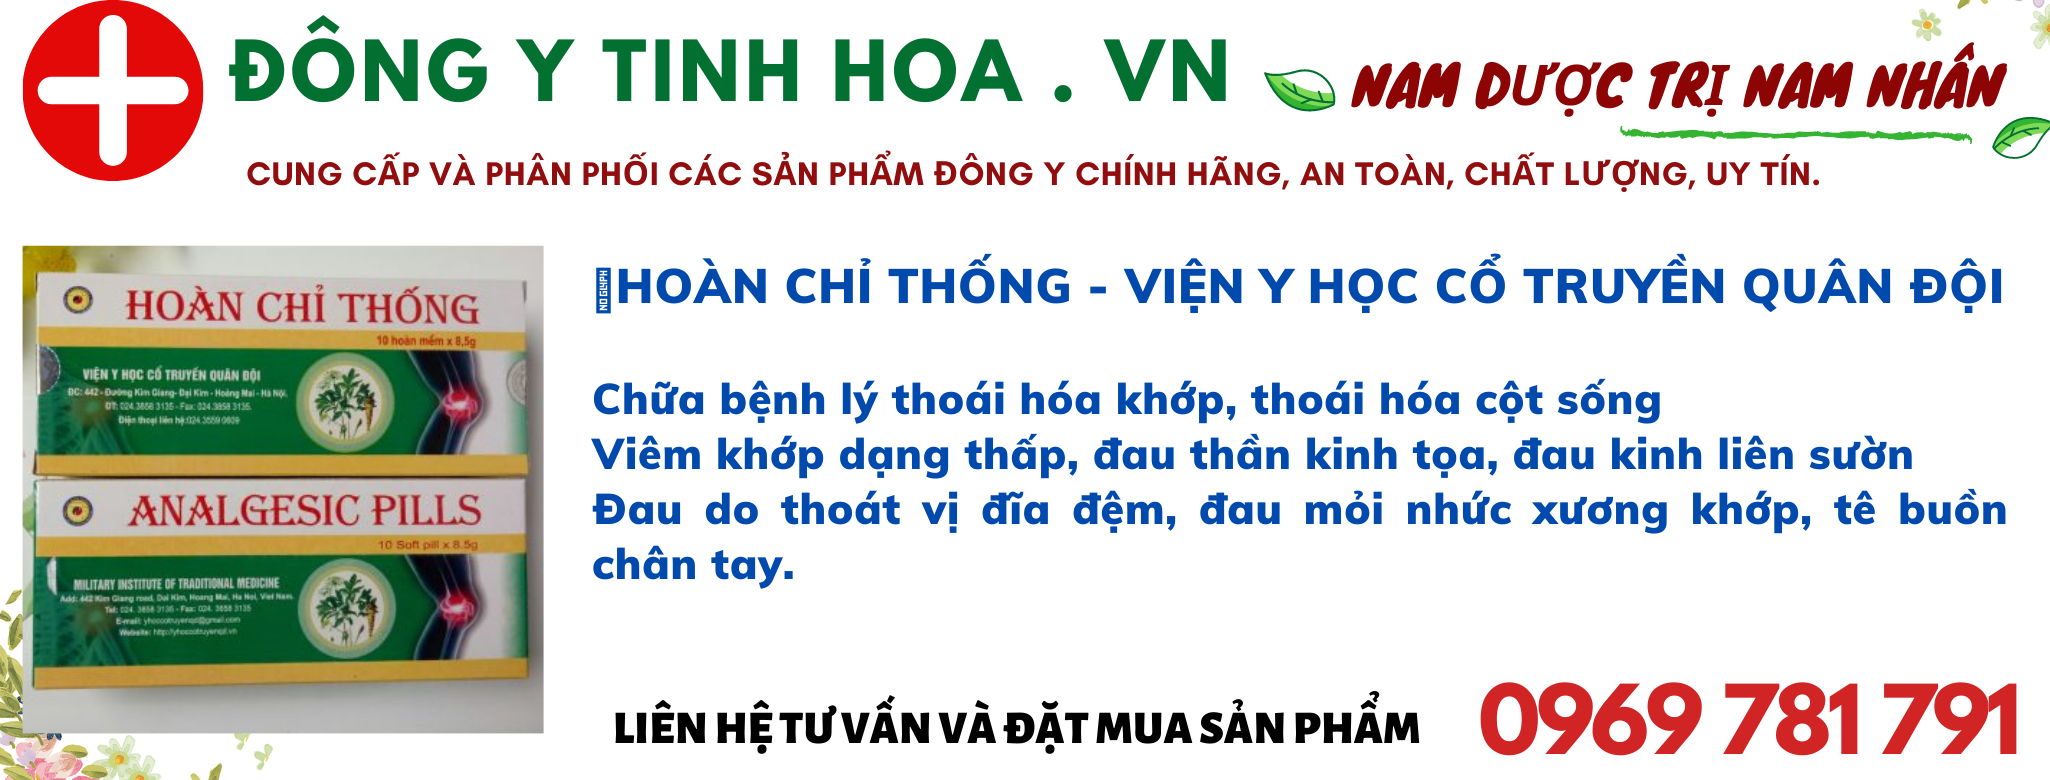 hoan-chi-thong-vien-y-hoc-co-truyen-quan-doi